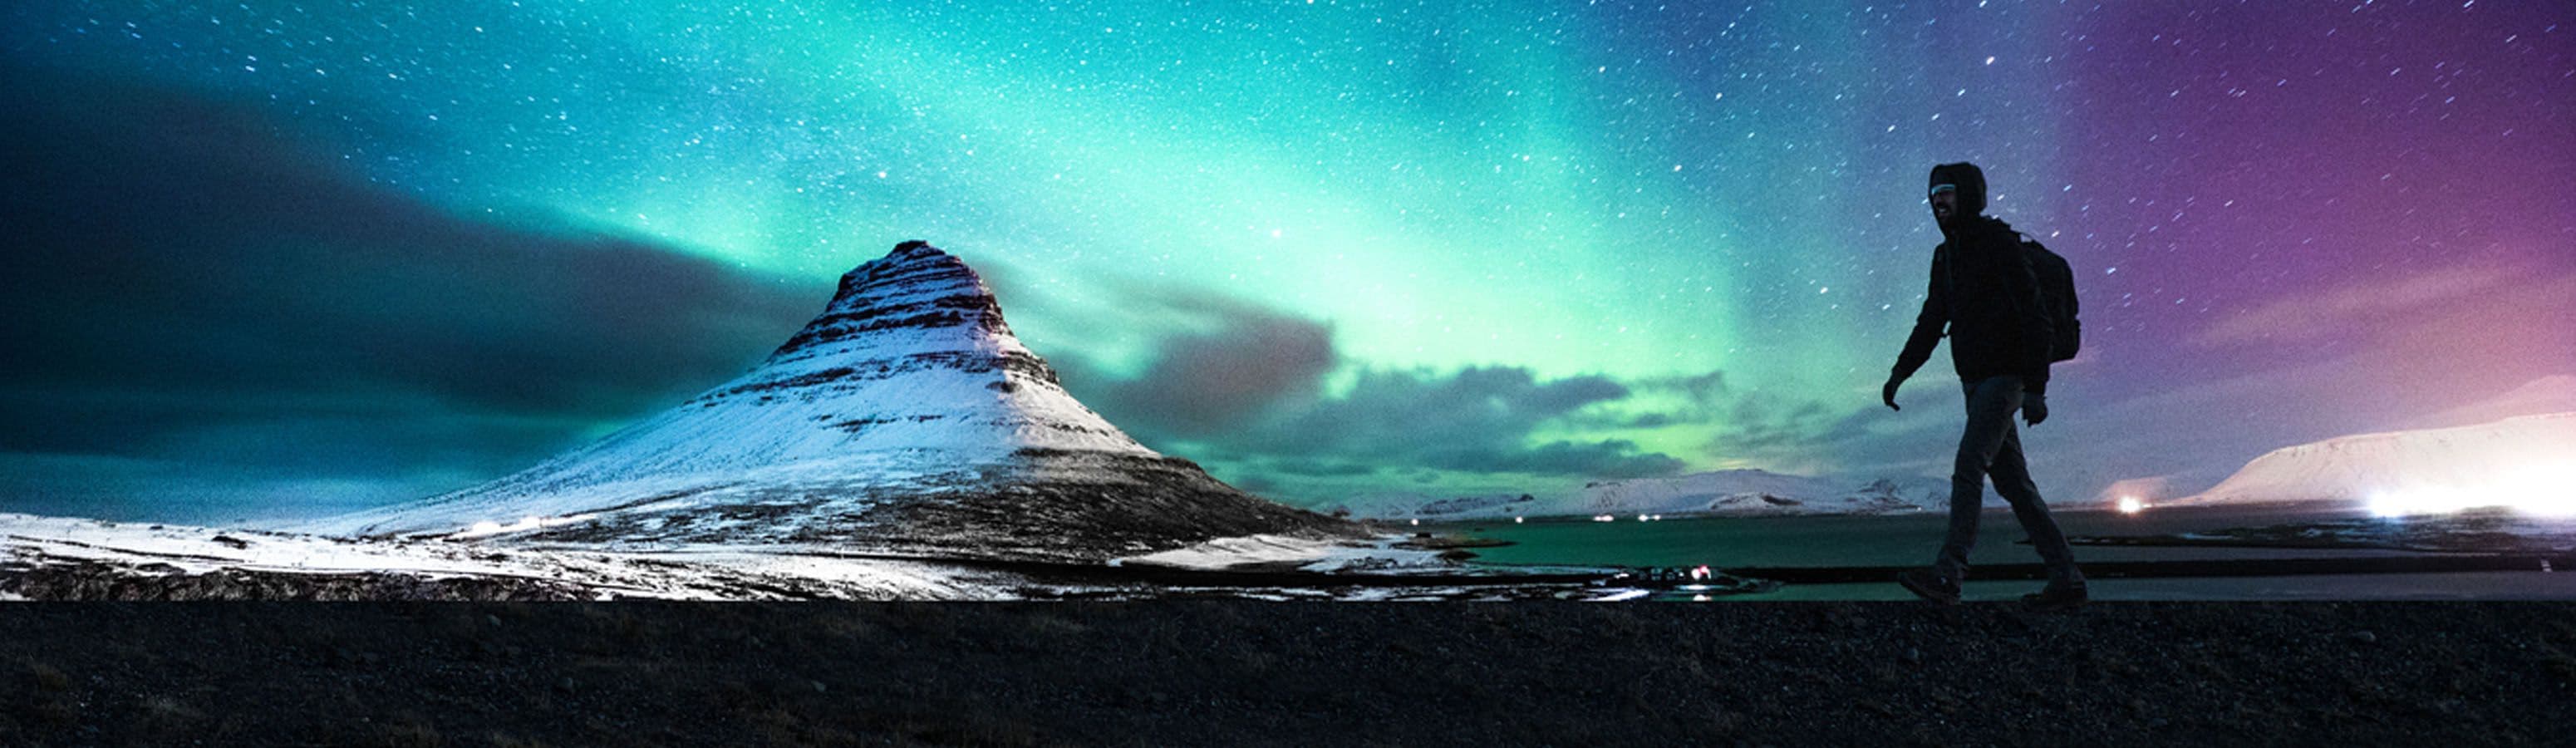 ICELAND - A world full of fantasy